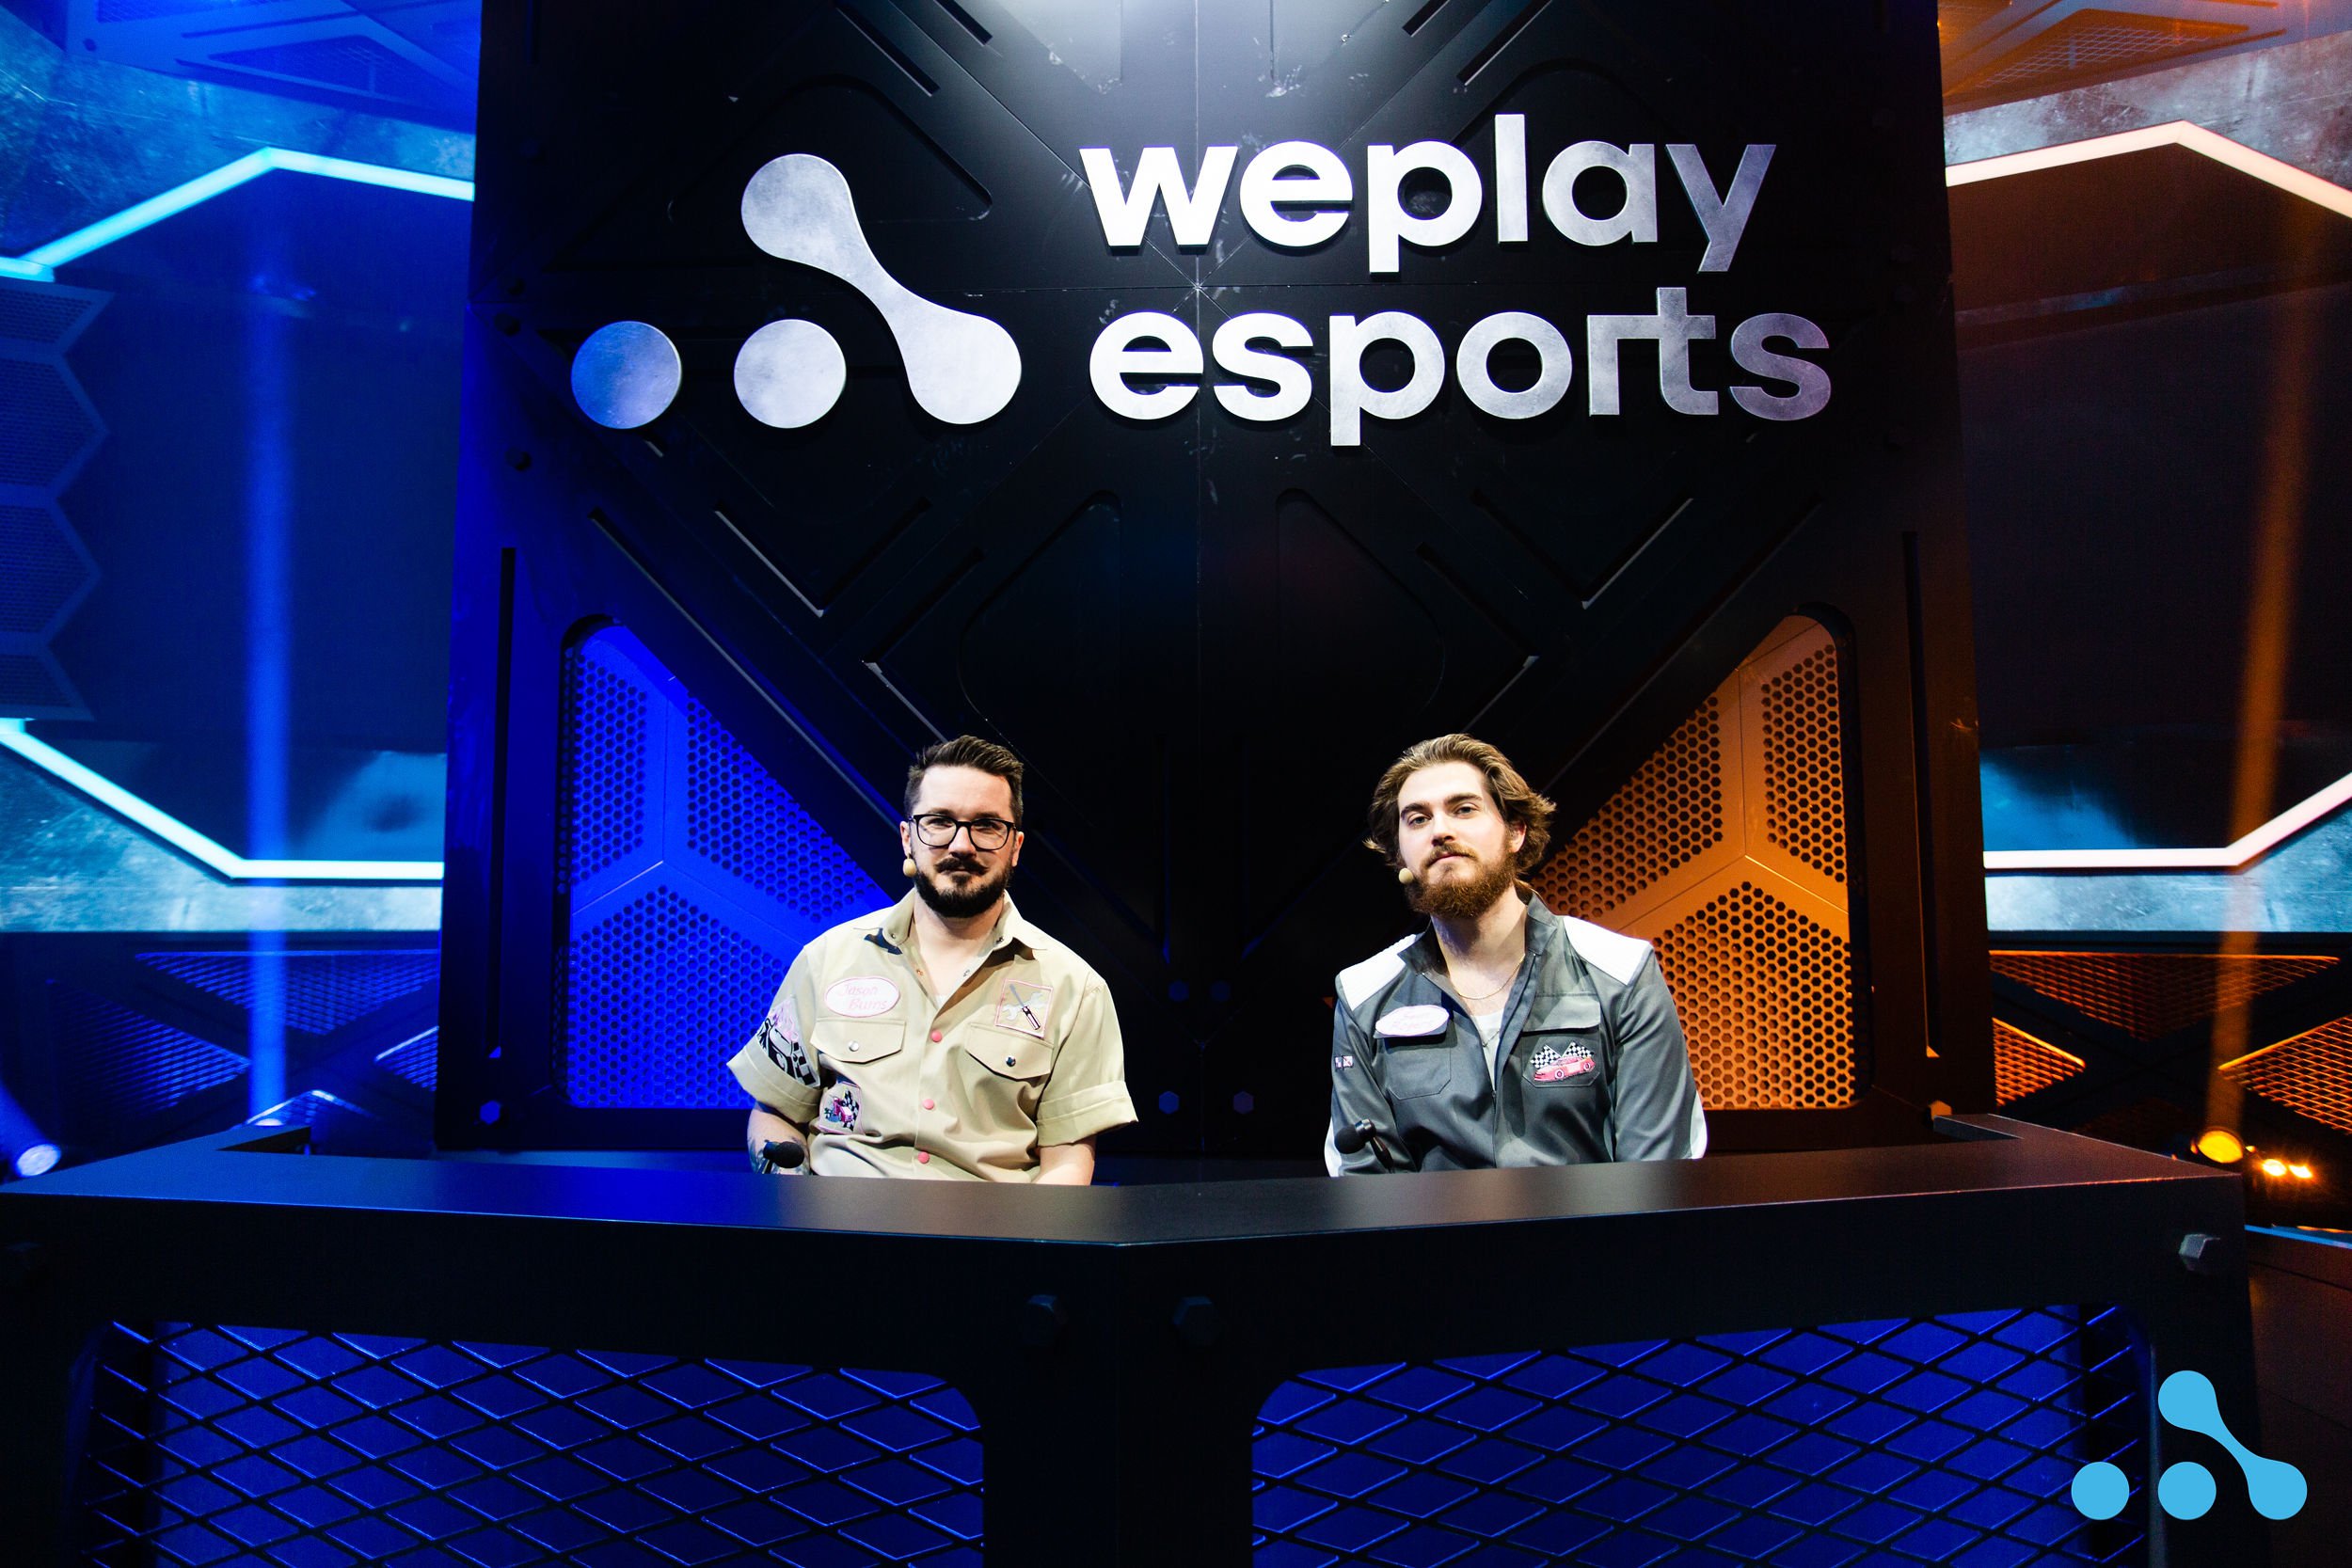 WePlay Esports Invitational featuring Rocket League. Photo: WePlay Holding